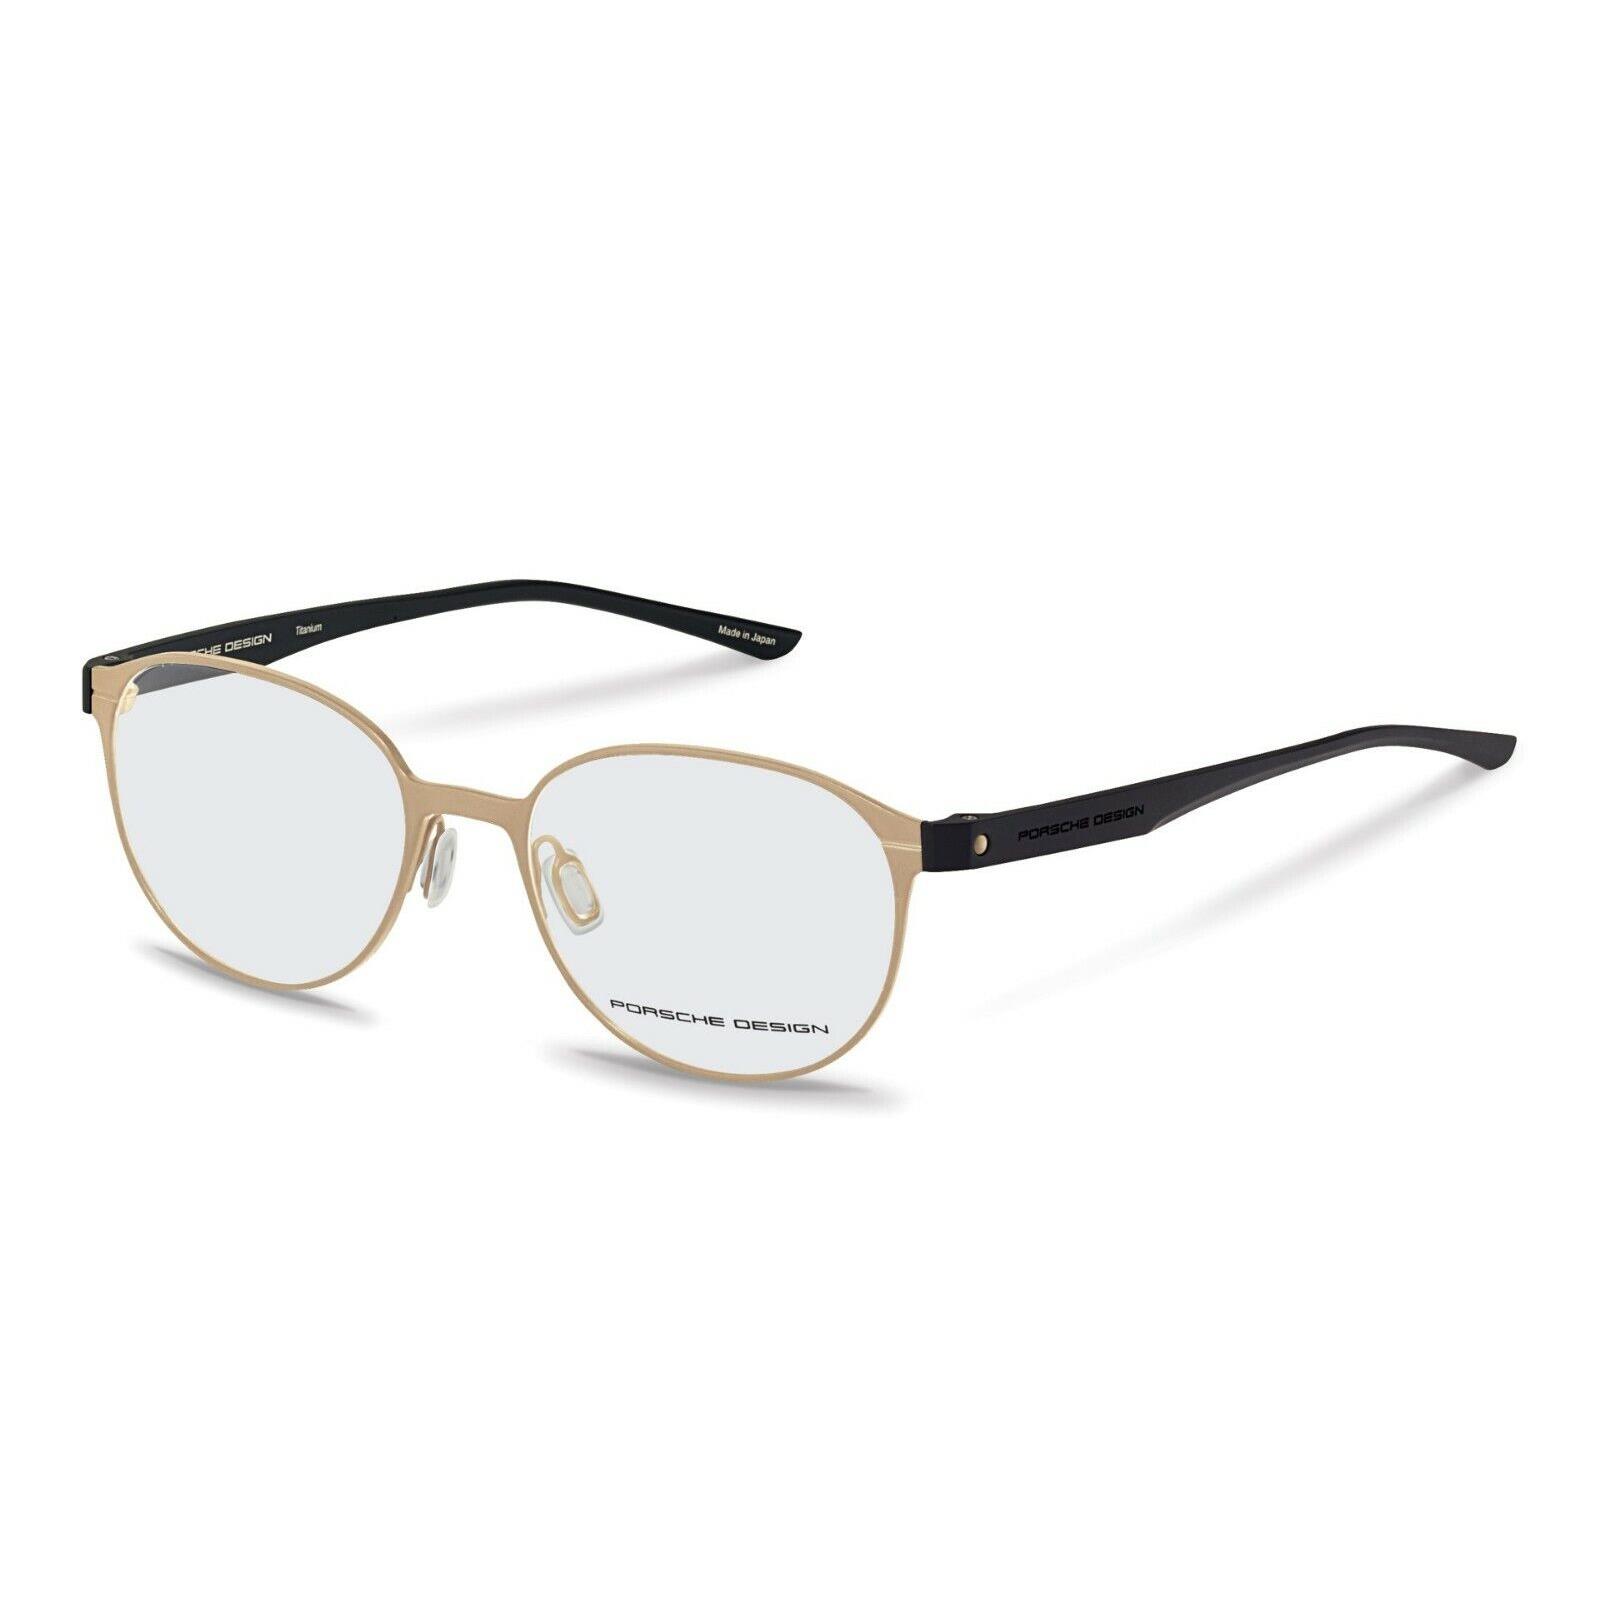 Porsche Design P 8345 C Gold Eyeglasses